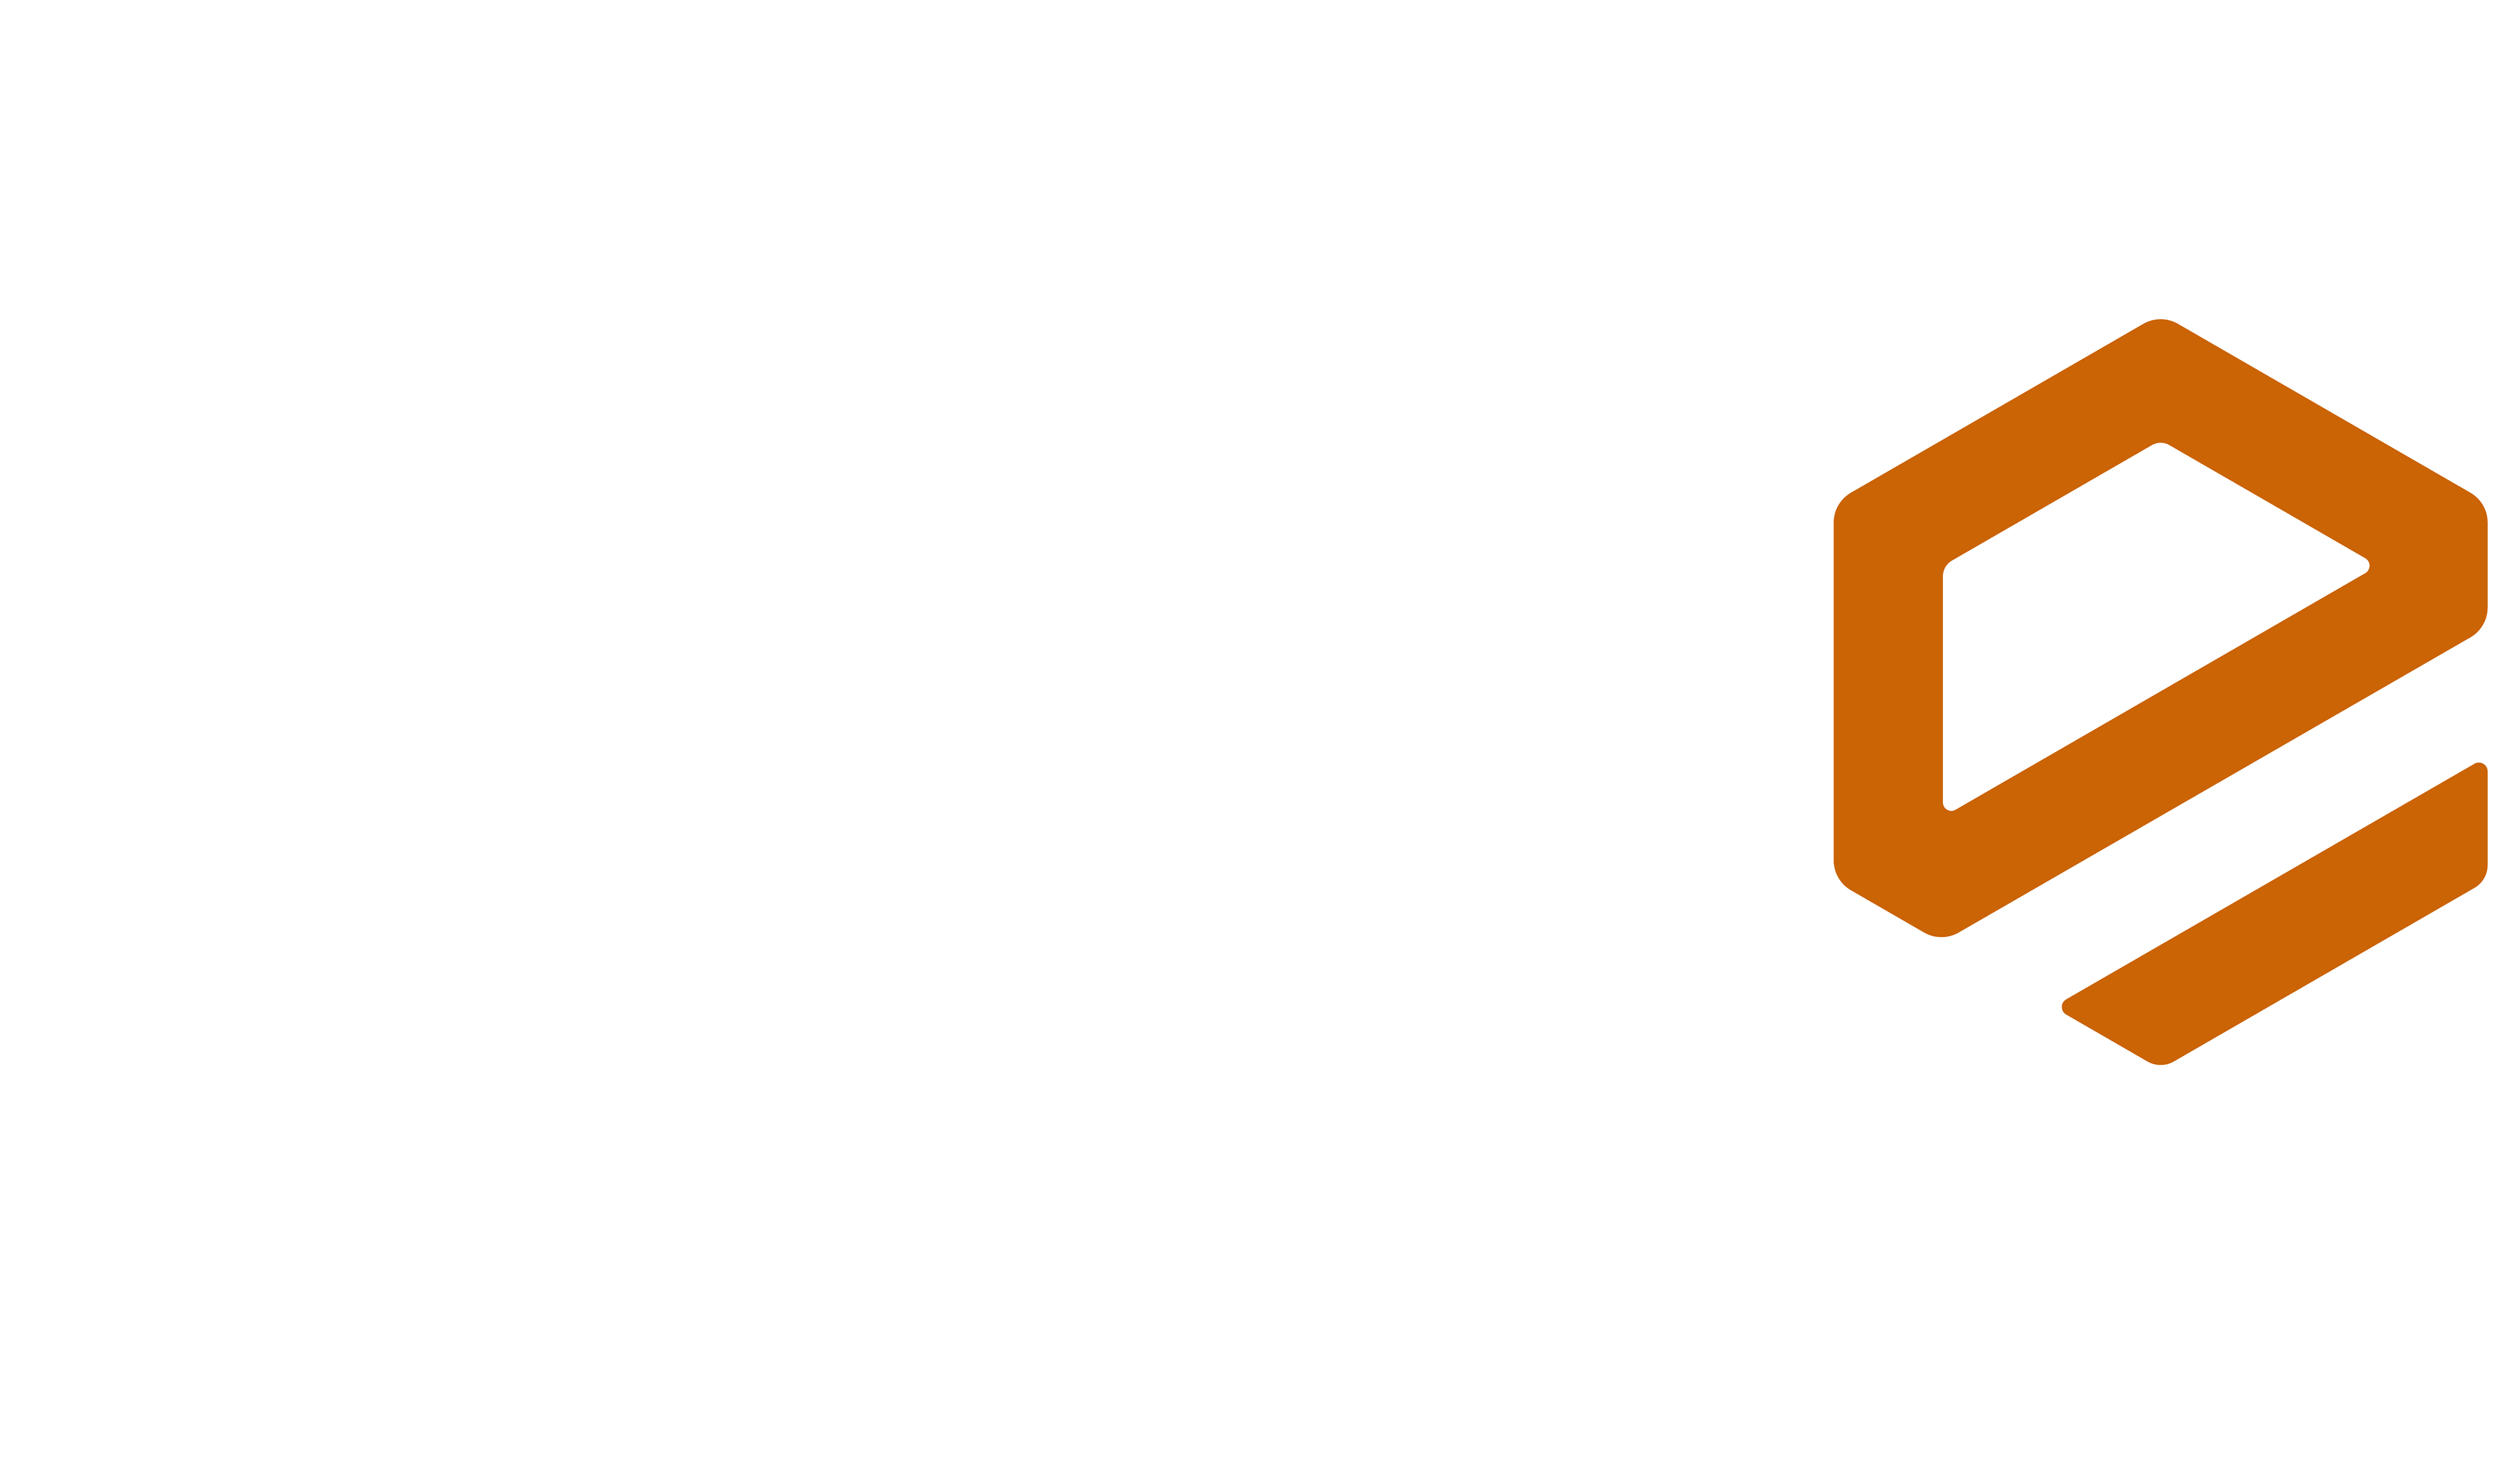 Engecad Energia